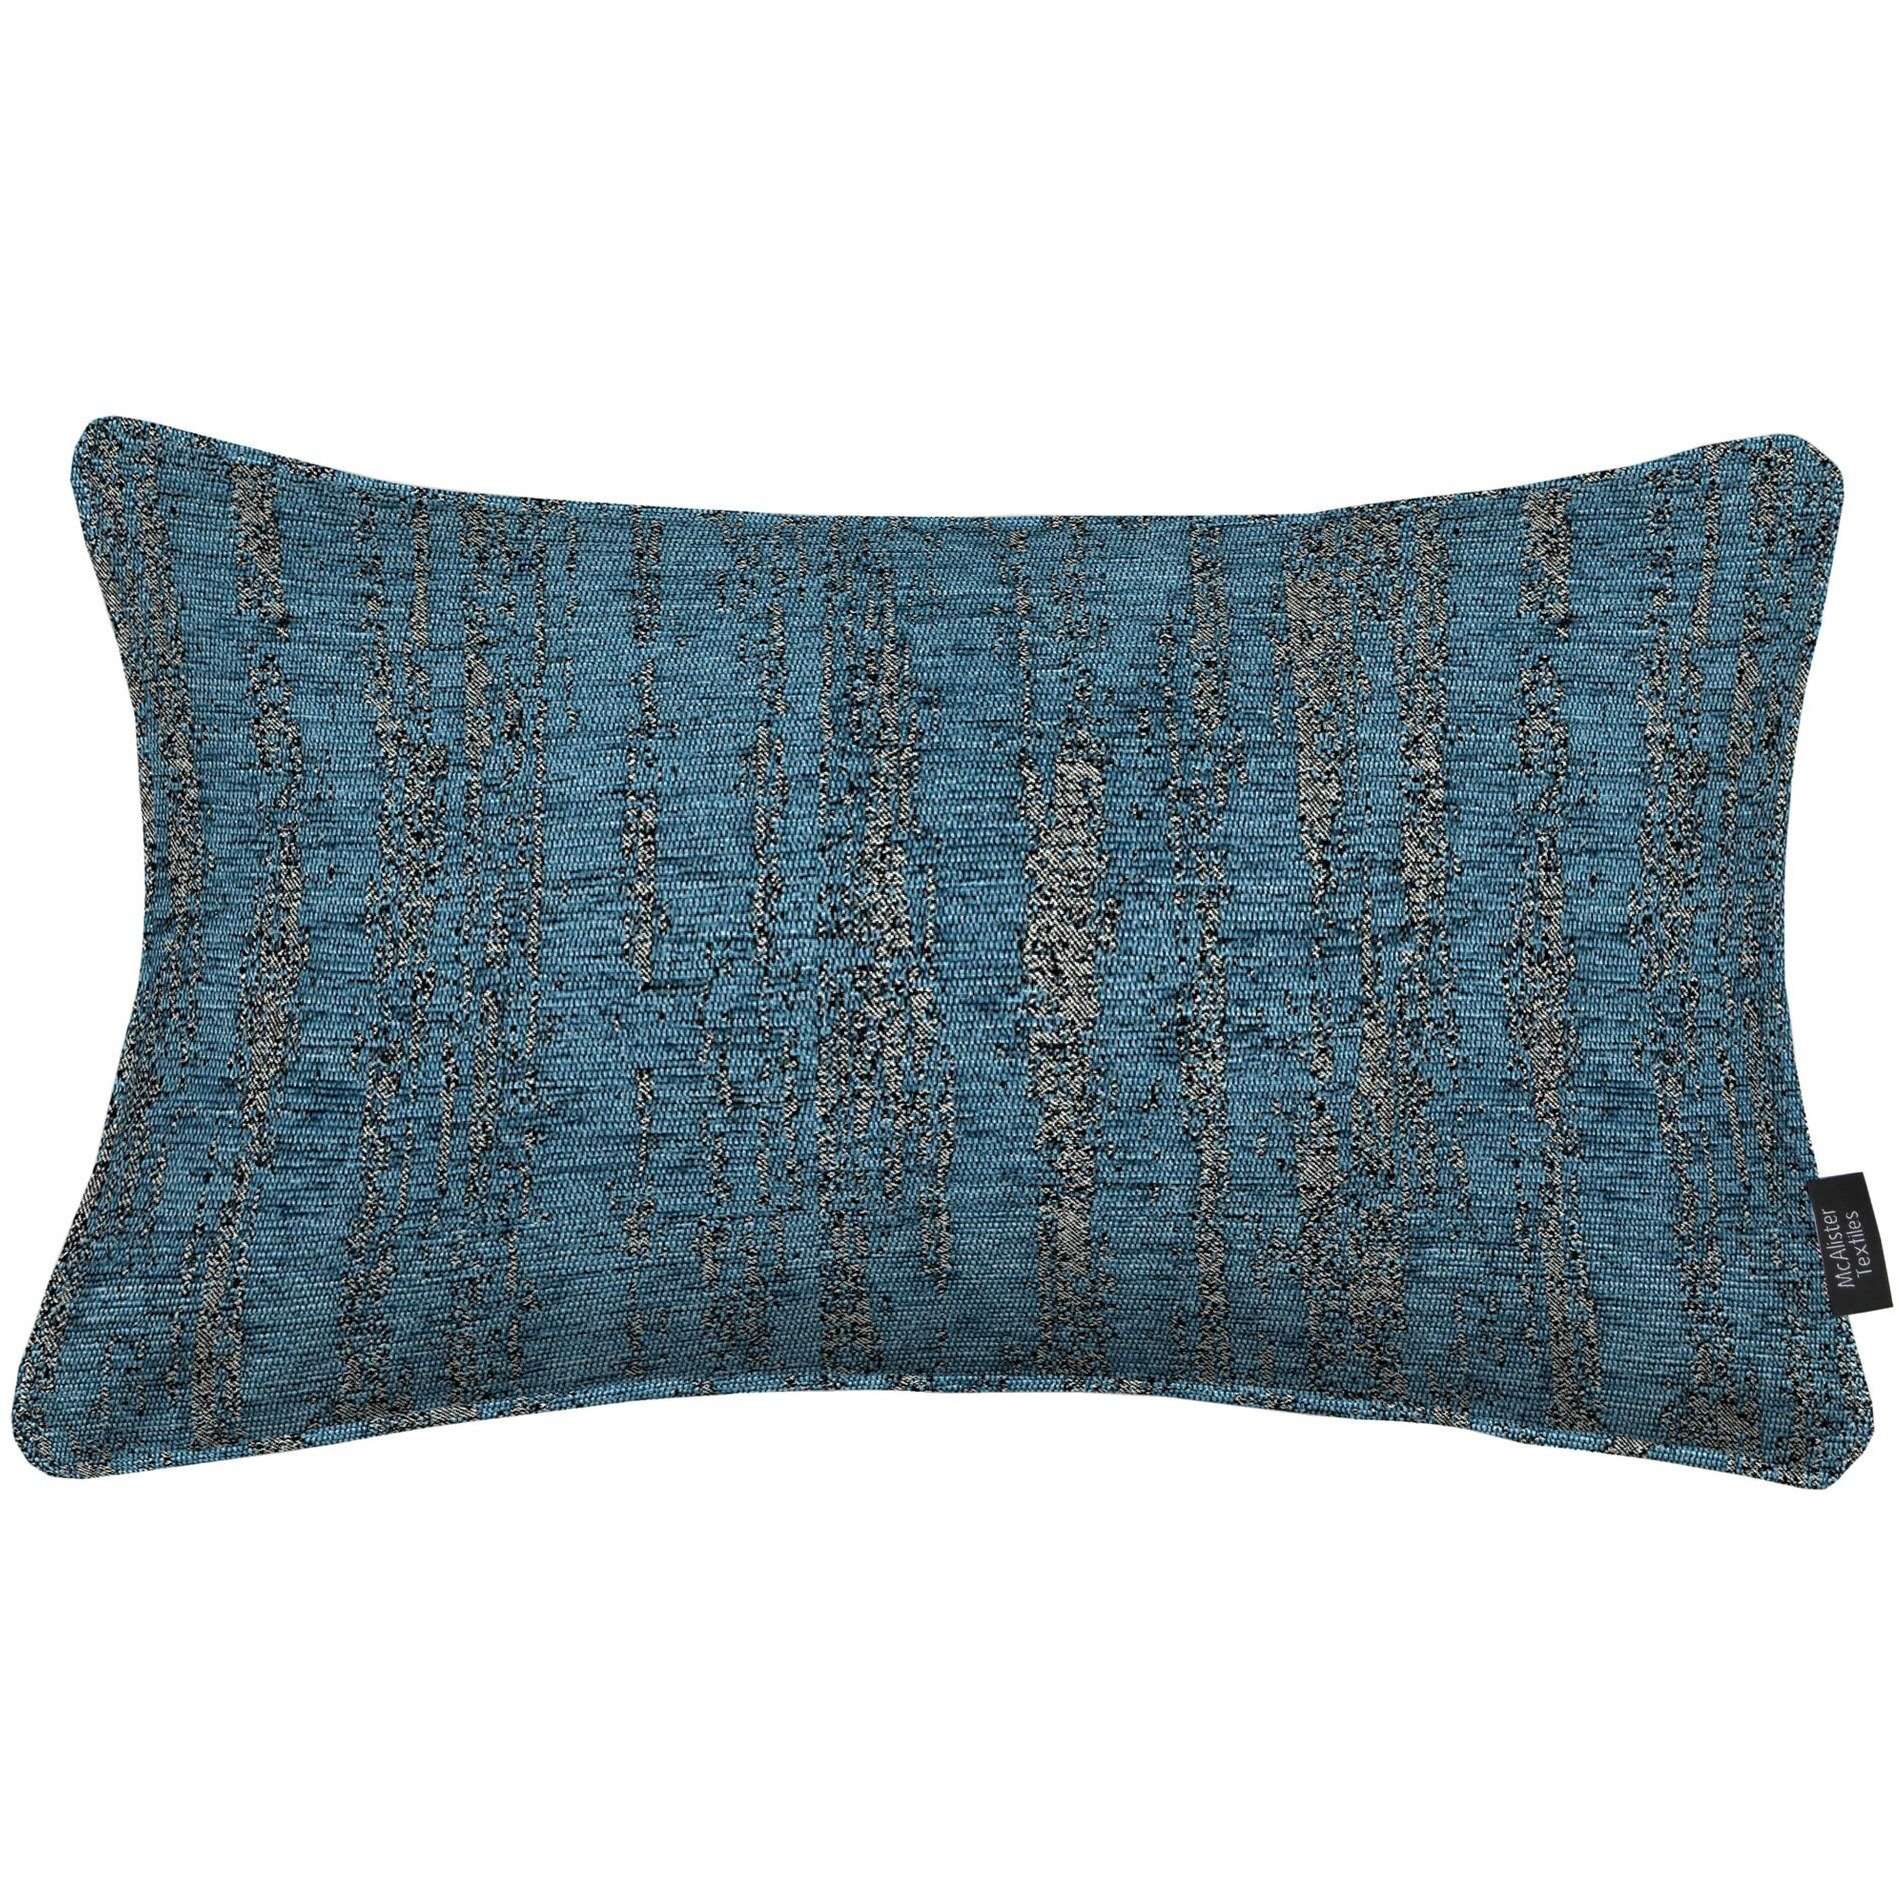 McAlister Textiles Textured Chenille Denim Blue Pillow Pillow Cover Only 50cm x 30cm 